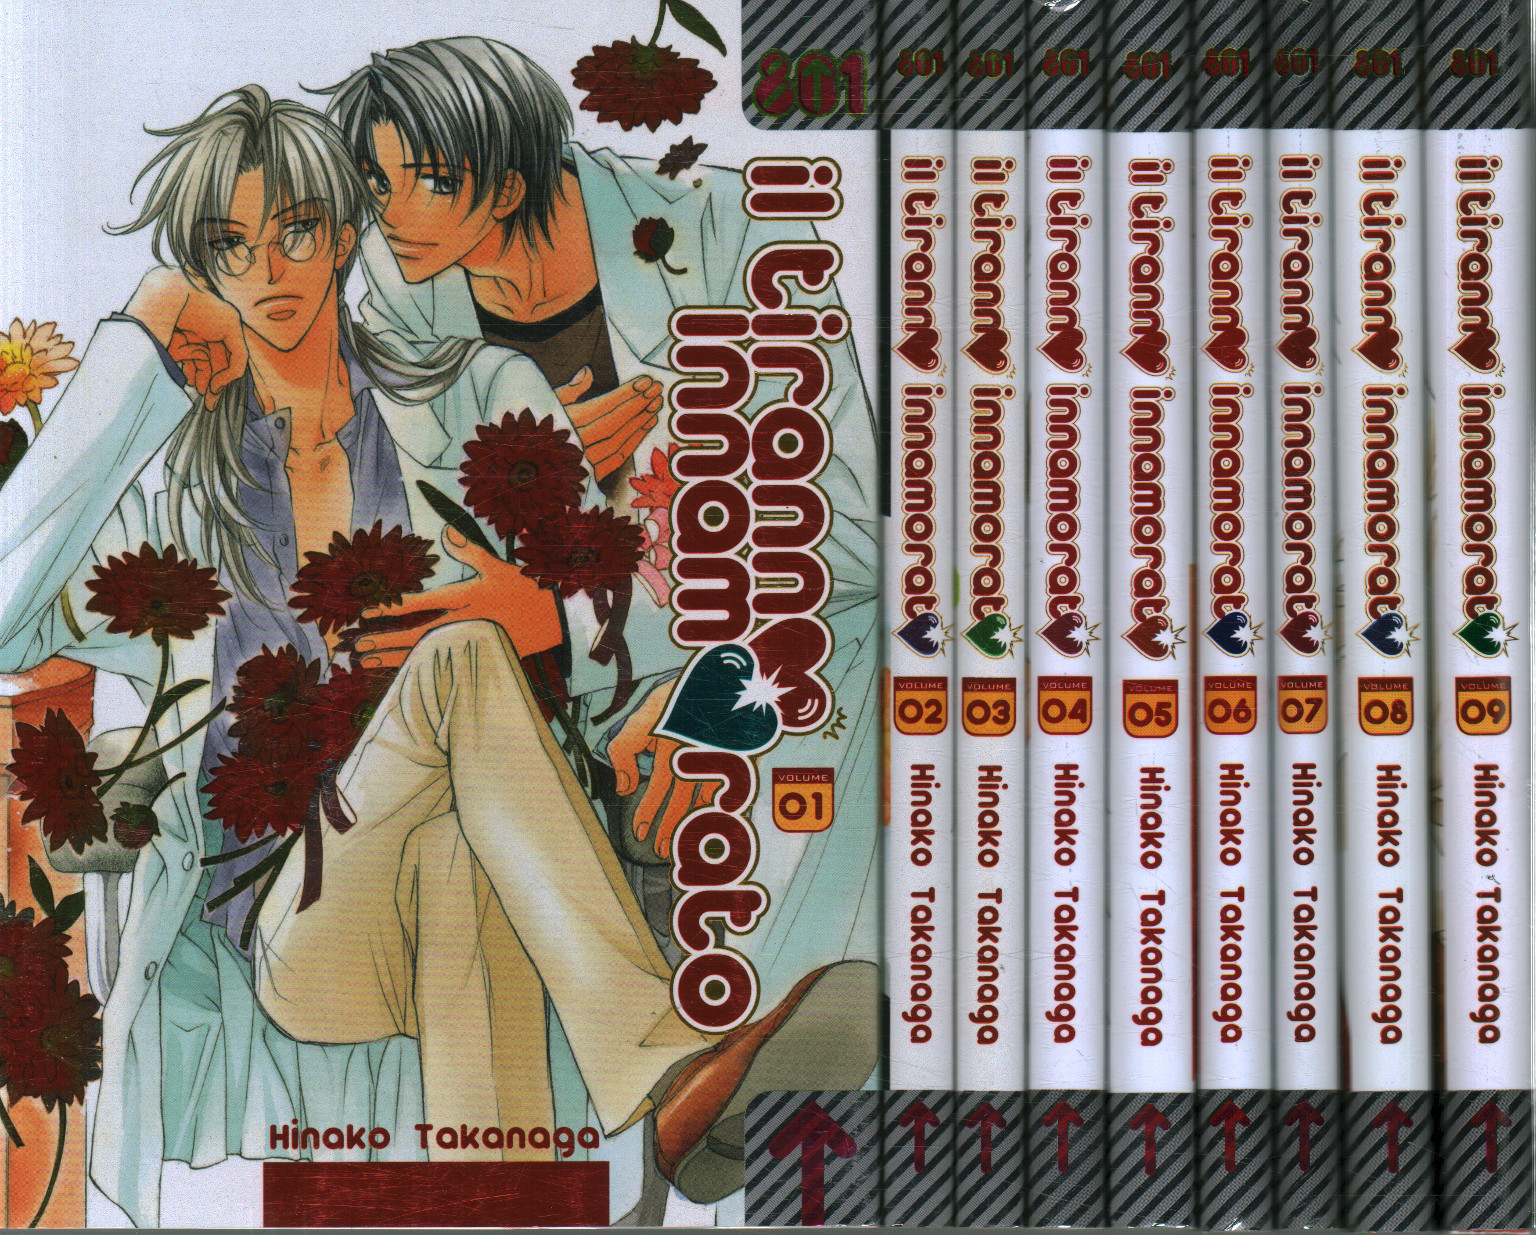 Le tyran amoureux. Série complète (9 tomes), Hinako Takanaga